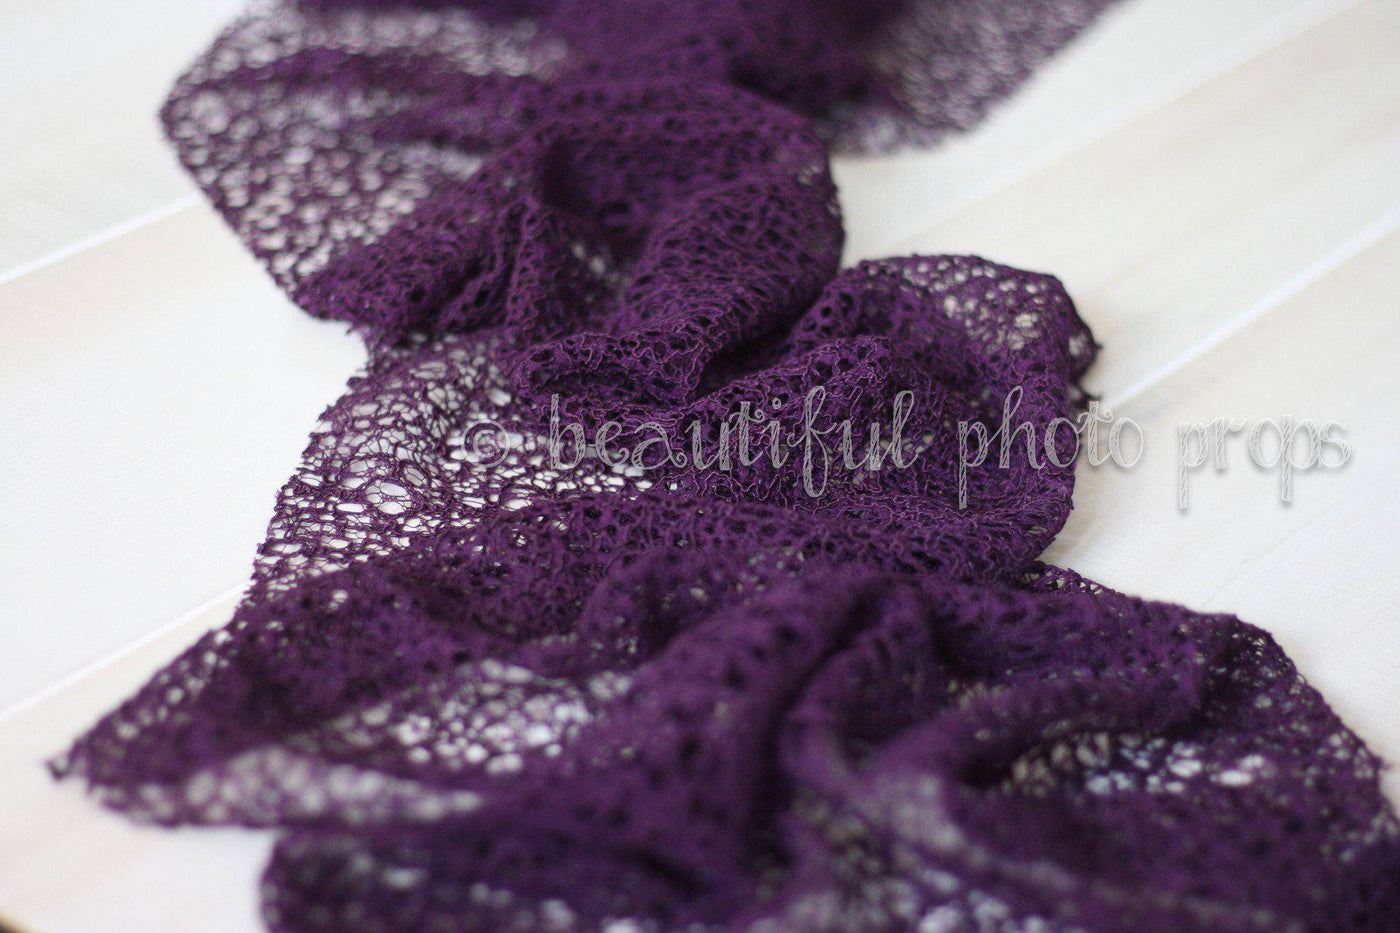 Fabric Lace Wrap in Purple - Beautiful Photo Props